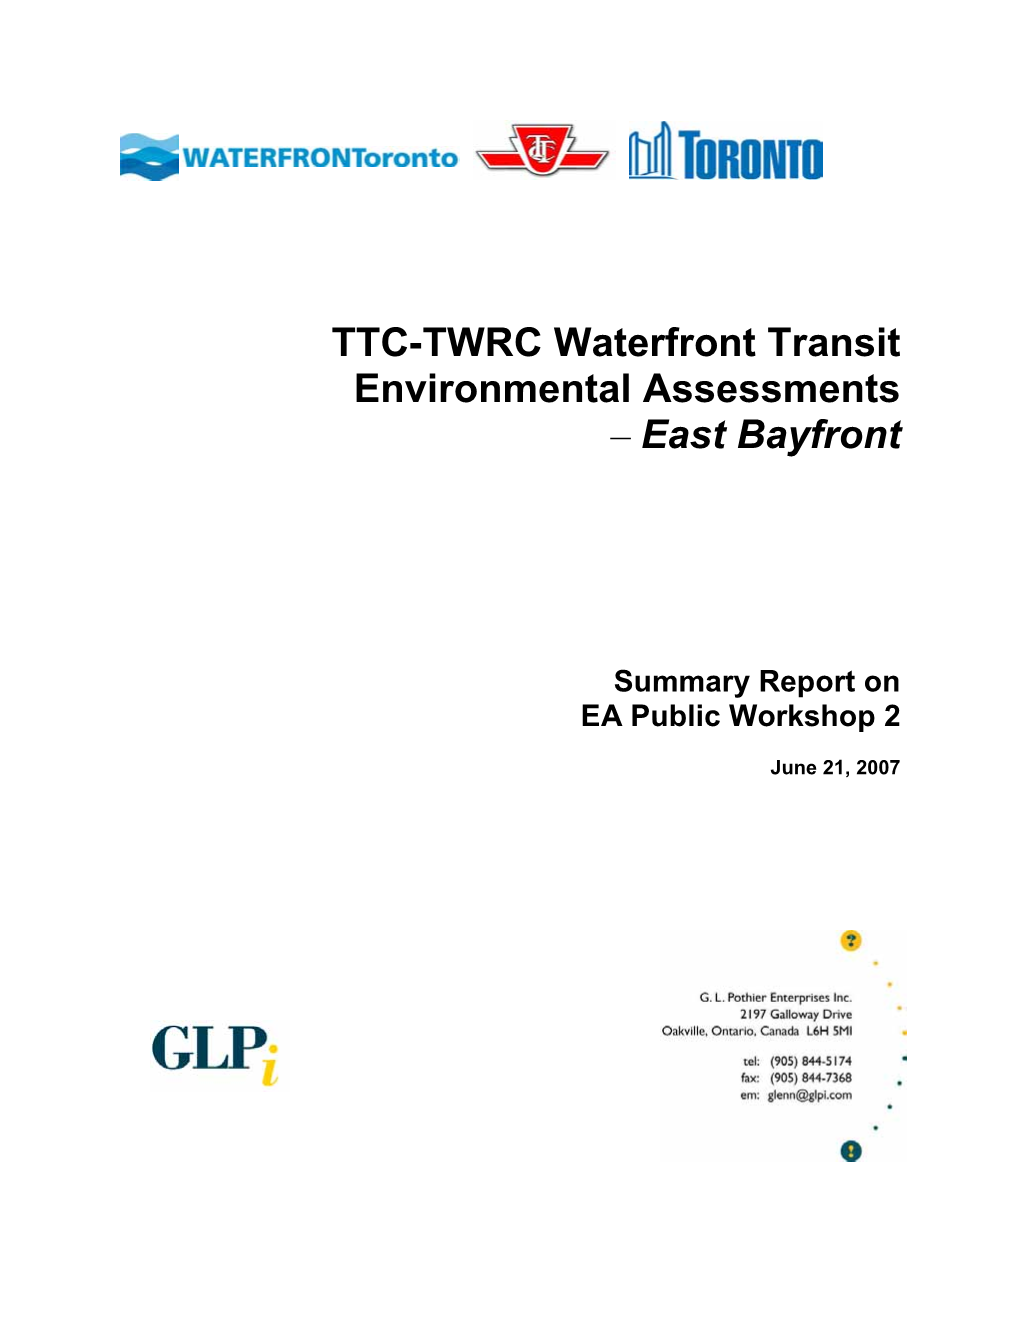 TTC-TWRC Waterfront Transit Environmental Assessments – East Bayfront